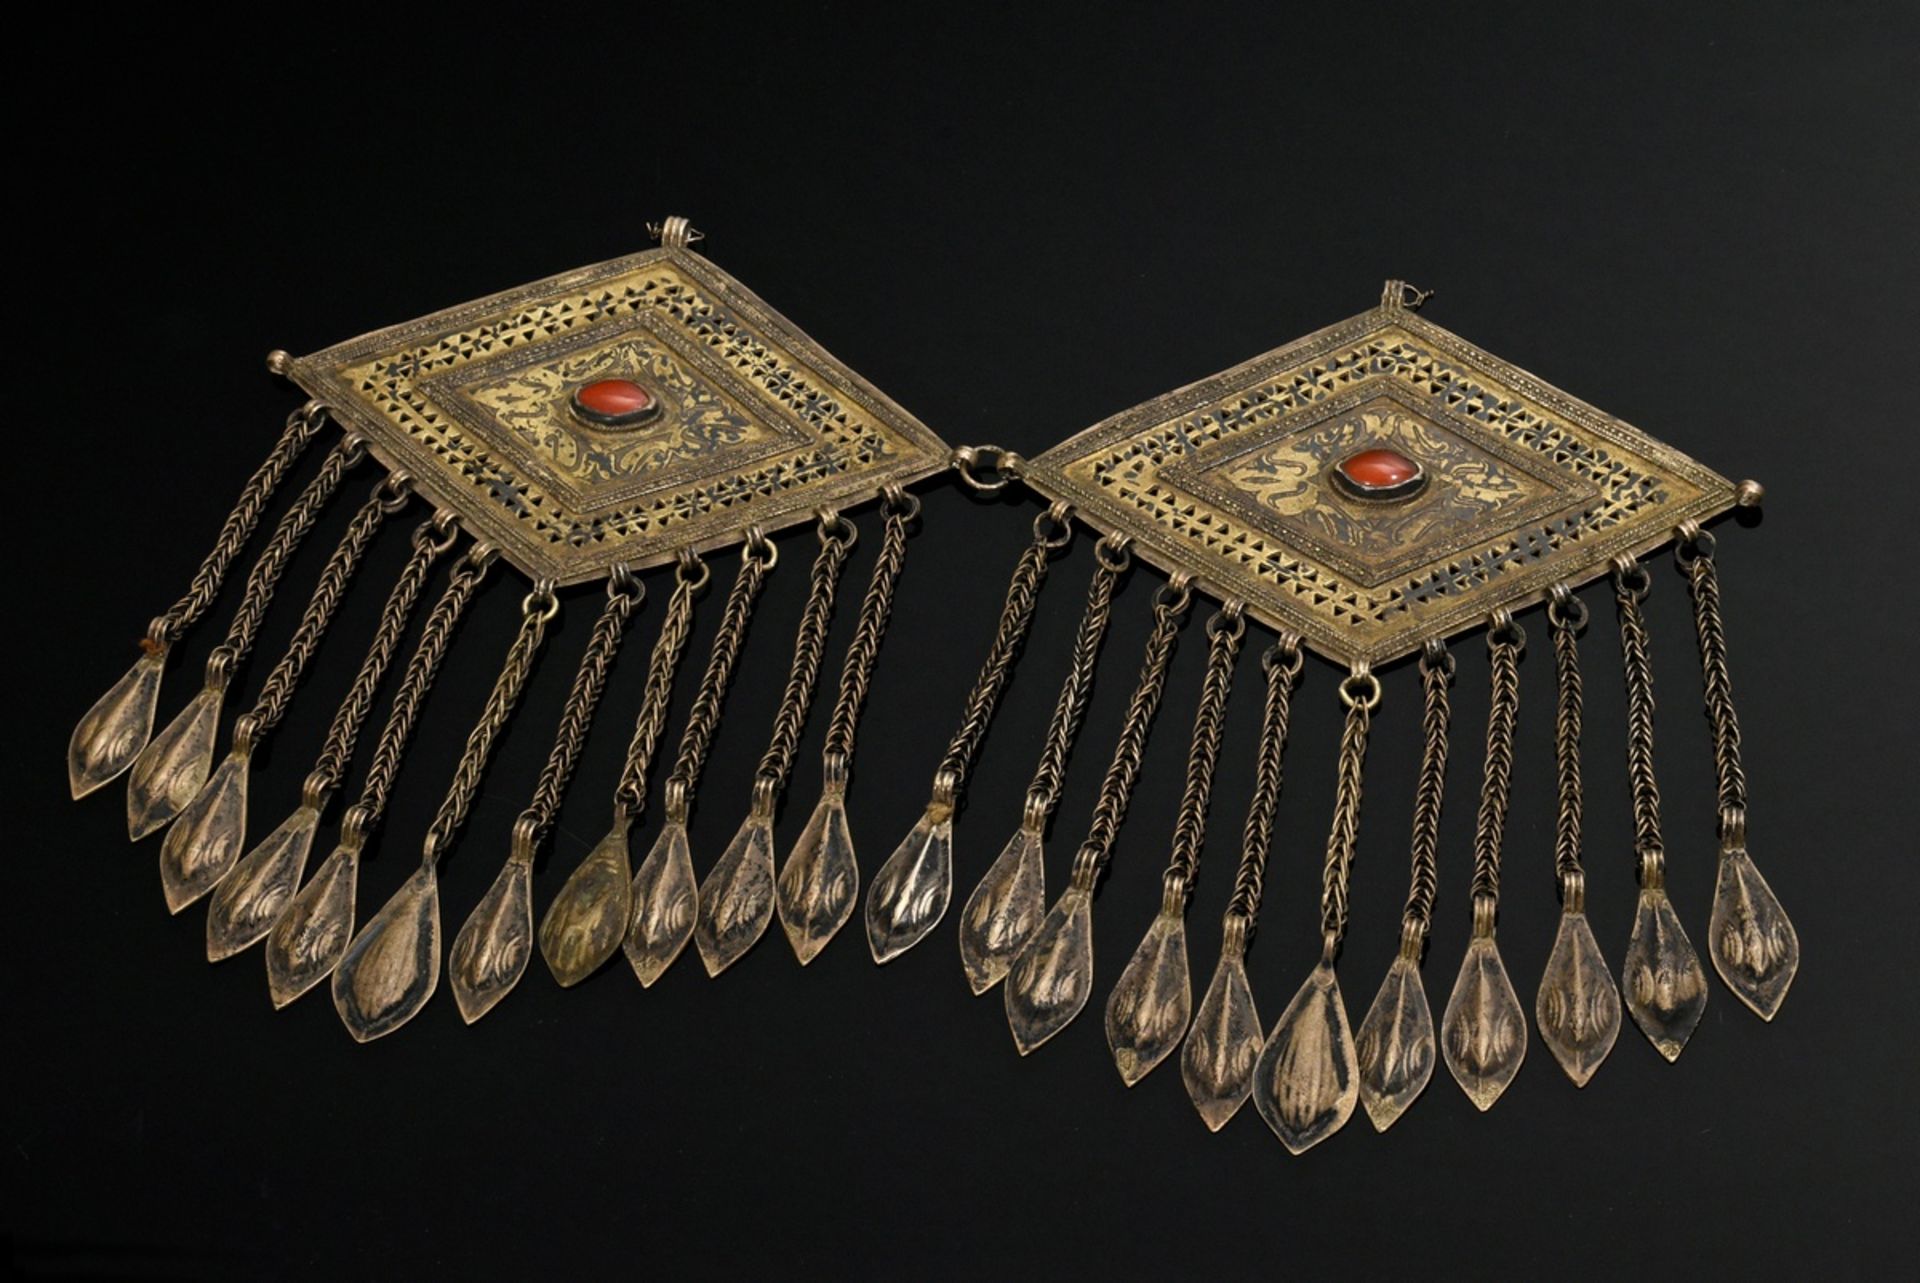 Tekke Turkmen coat clasp "Tschapraz" of diamond-shaped, open-worked and vegetal fire-gilt discs set